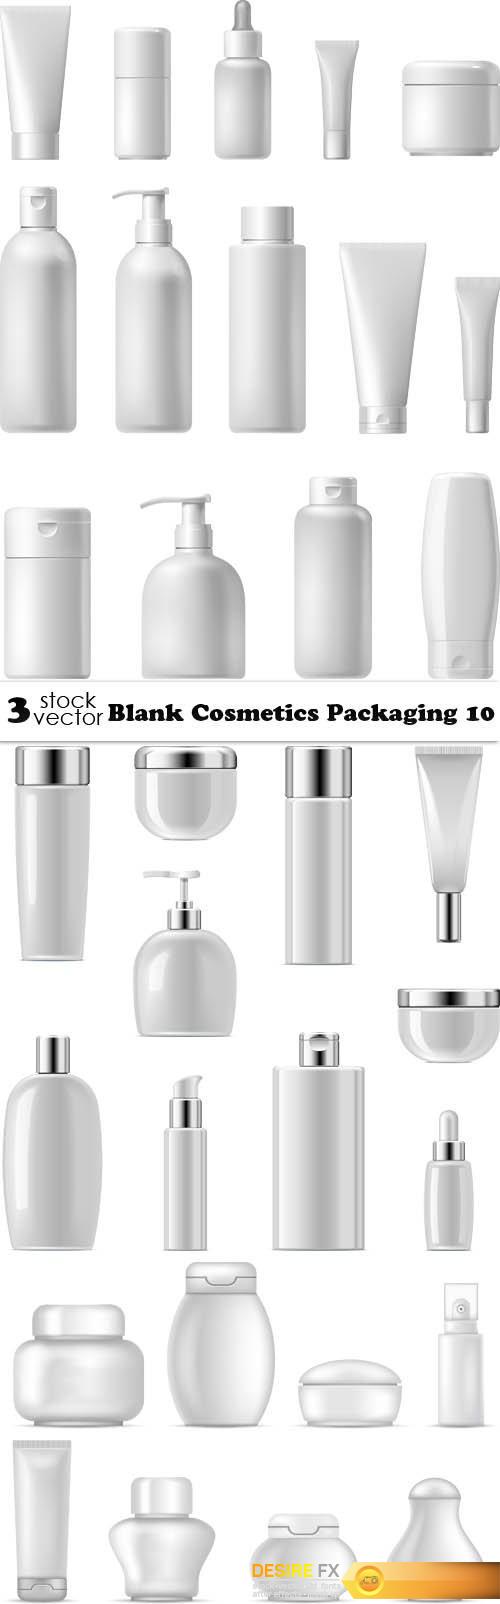 Vectors - Blank Cosmetics Packaging 10